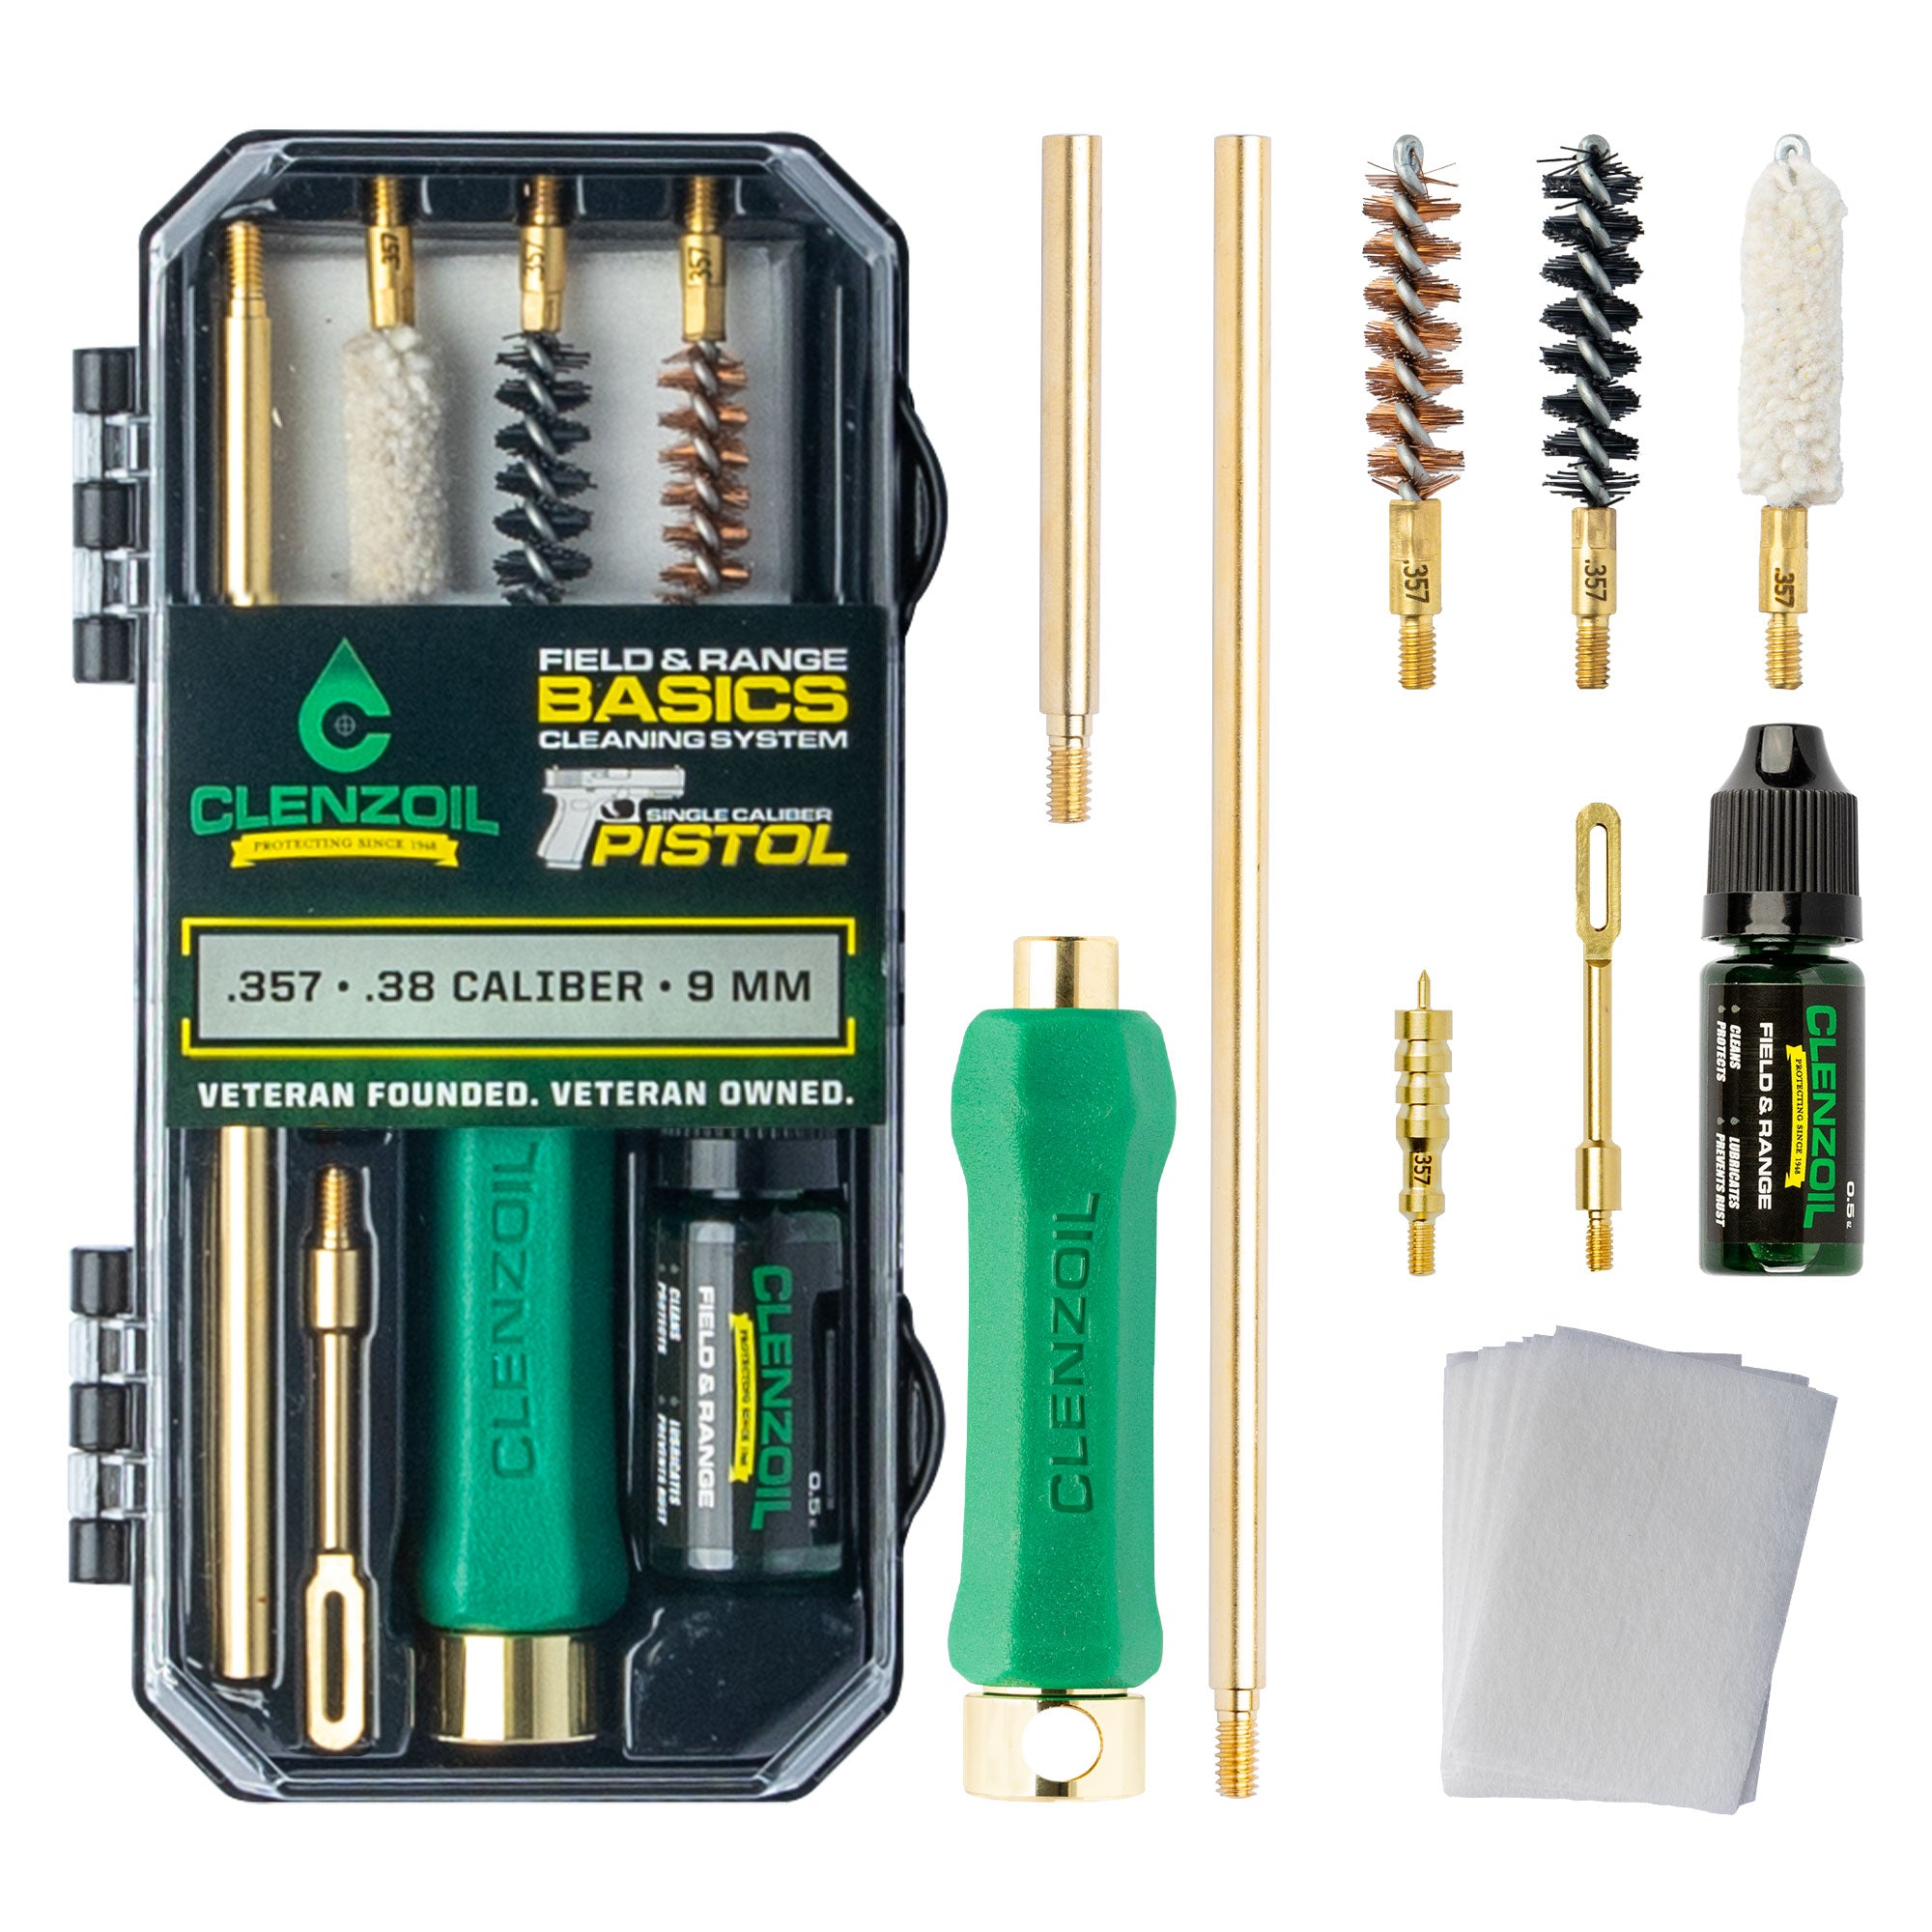 Pistol Basics Single Caliber Cleaning Kit